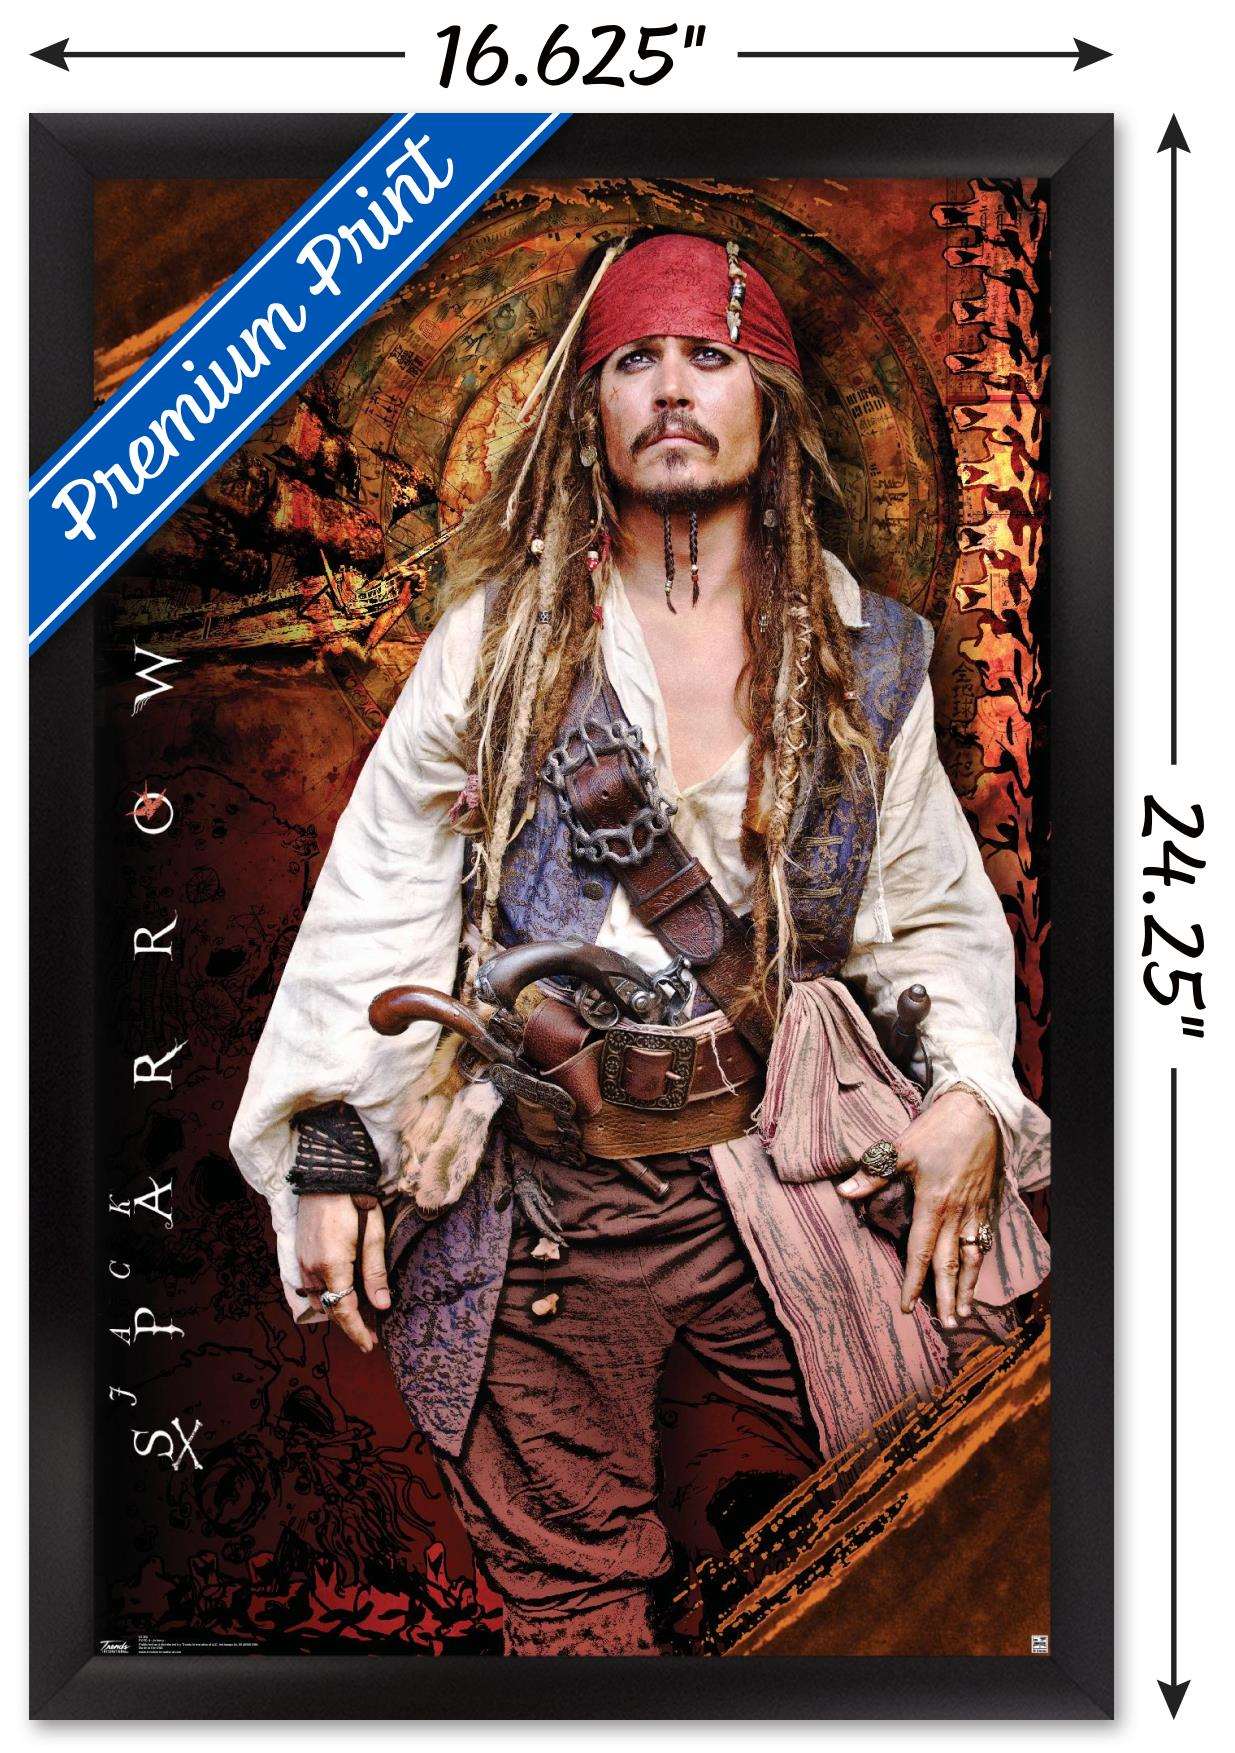 Disney Pirates of the Caribbean: On Stranger Tides - Johnny Depp Wall Poster, 14.725" x 22.375", Framed - image 3 of 5